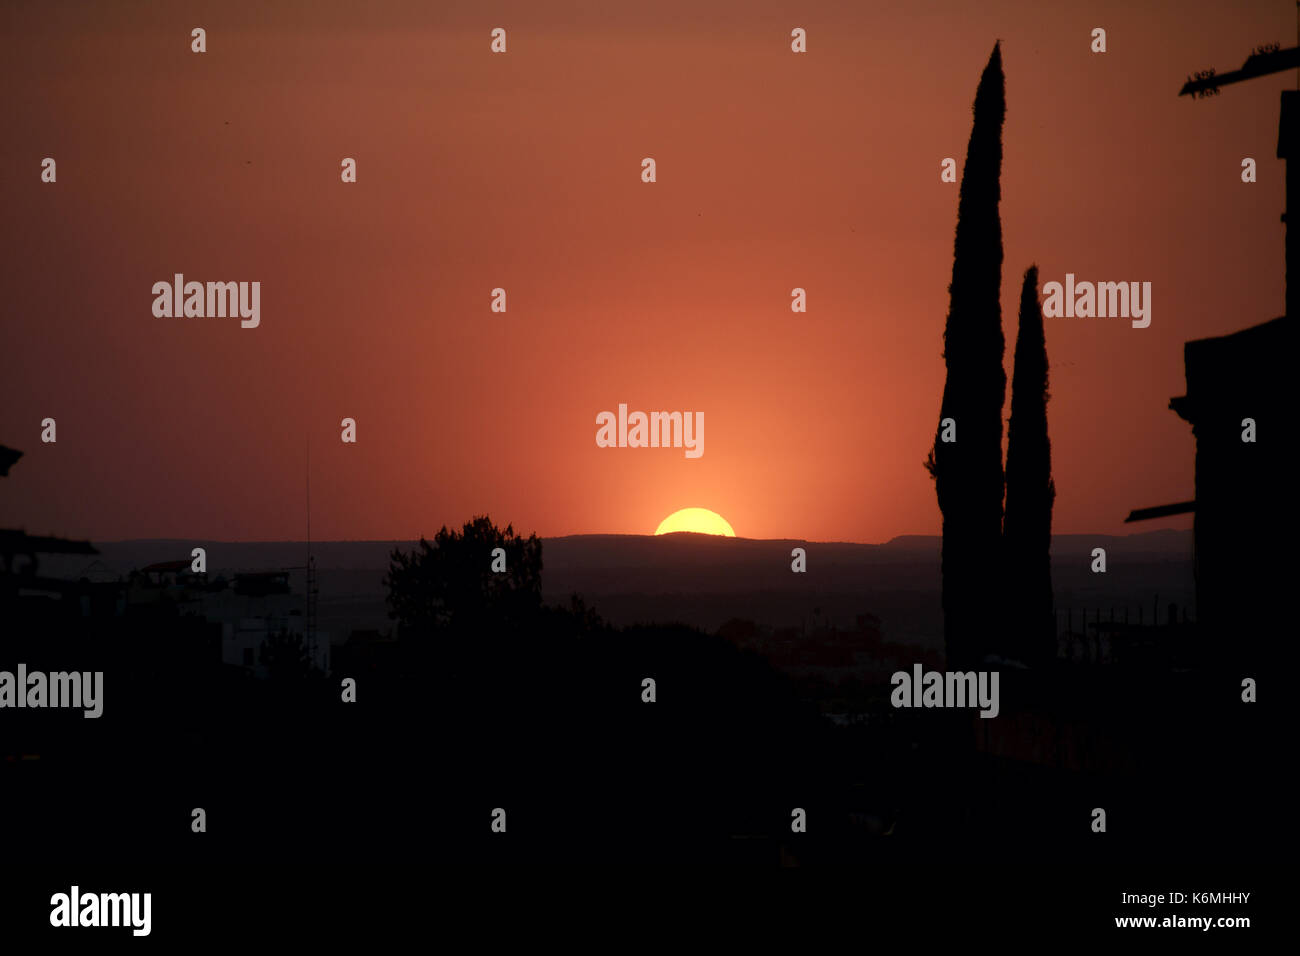 San Miguel de Allende, Guanajuato, Mexico - 2013: View of the horizon at sunset. Stock Photo